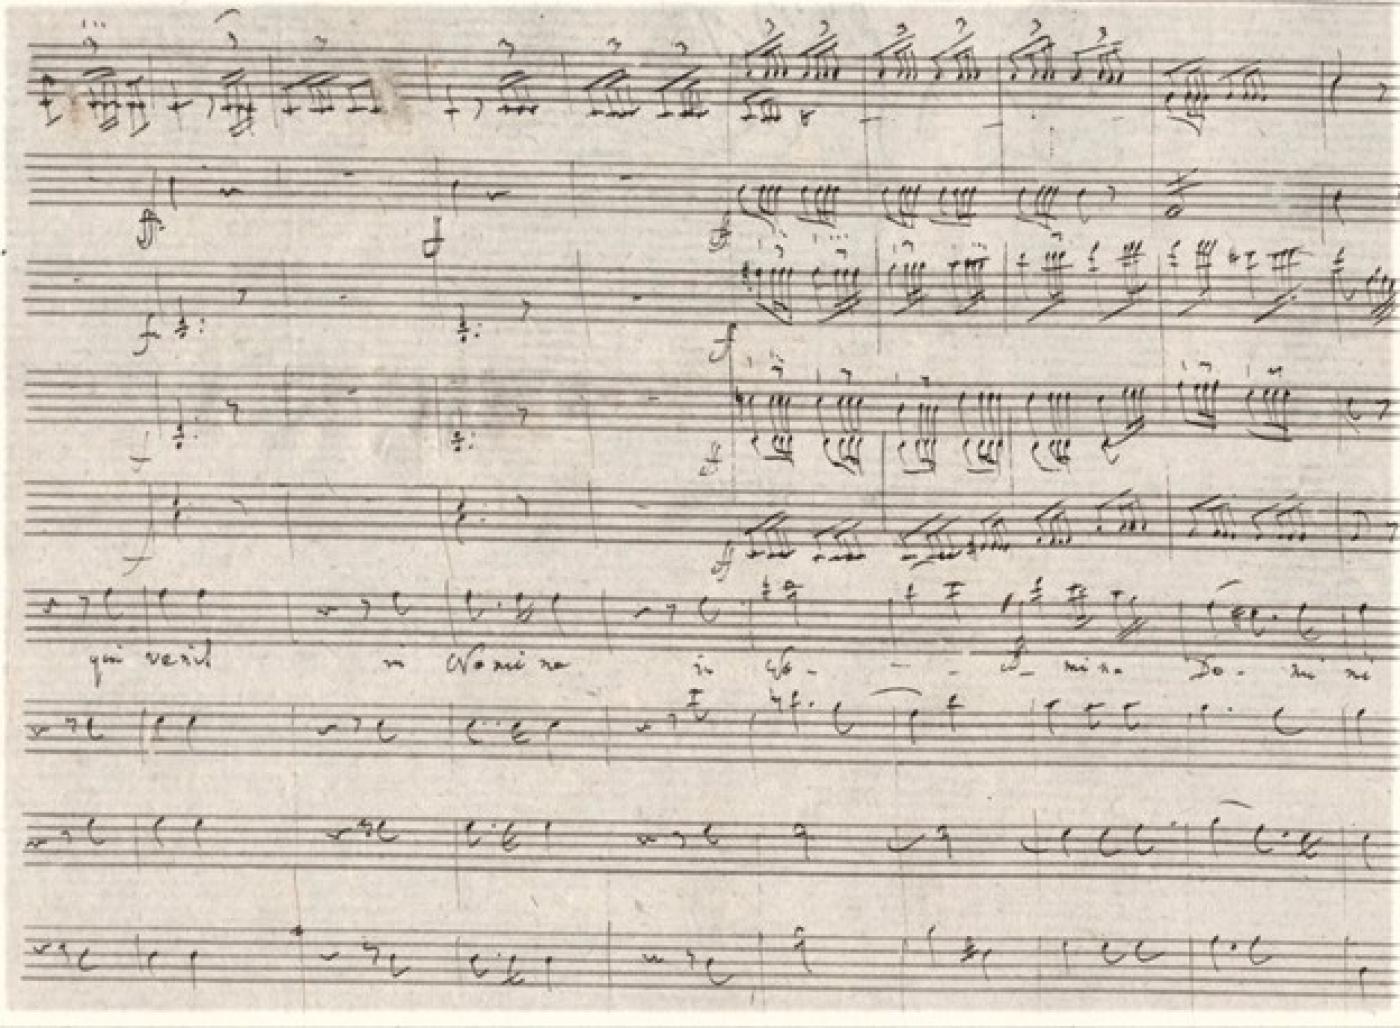 The Benedictus in Haydn’s own hand